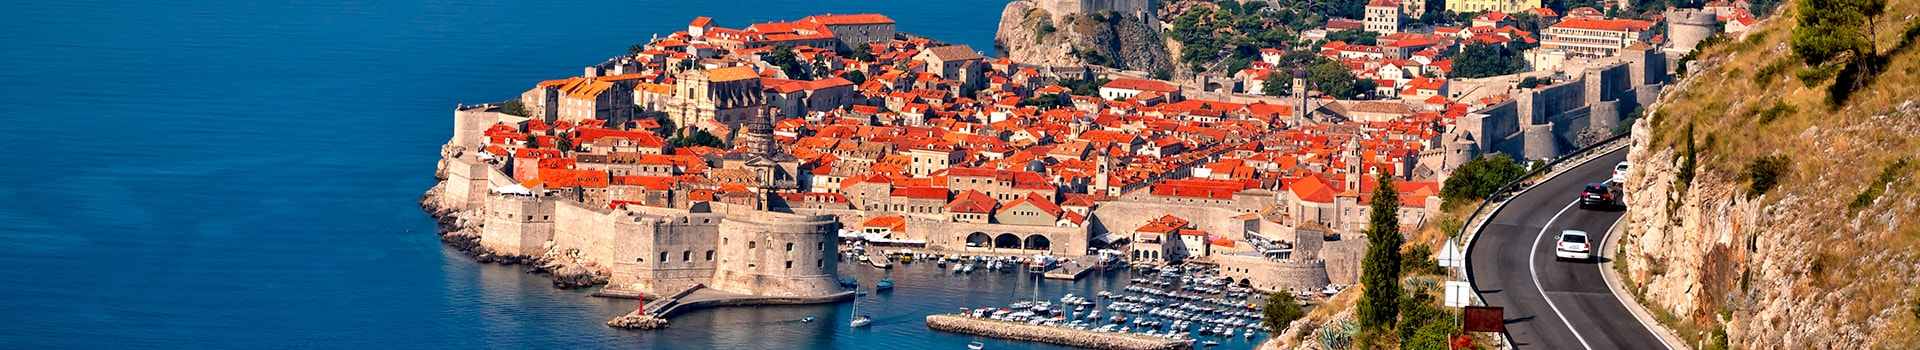 Nantes - Dubrovnik